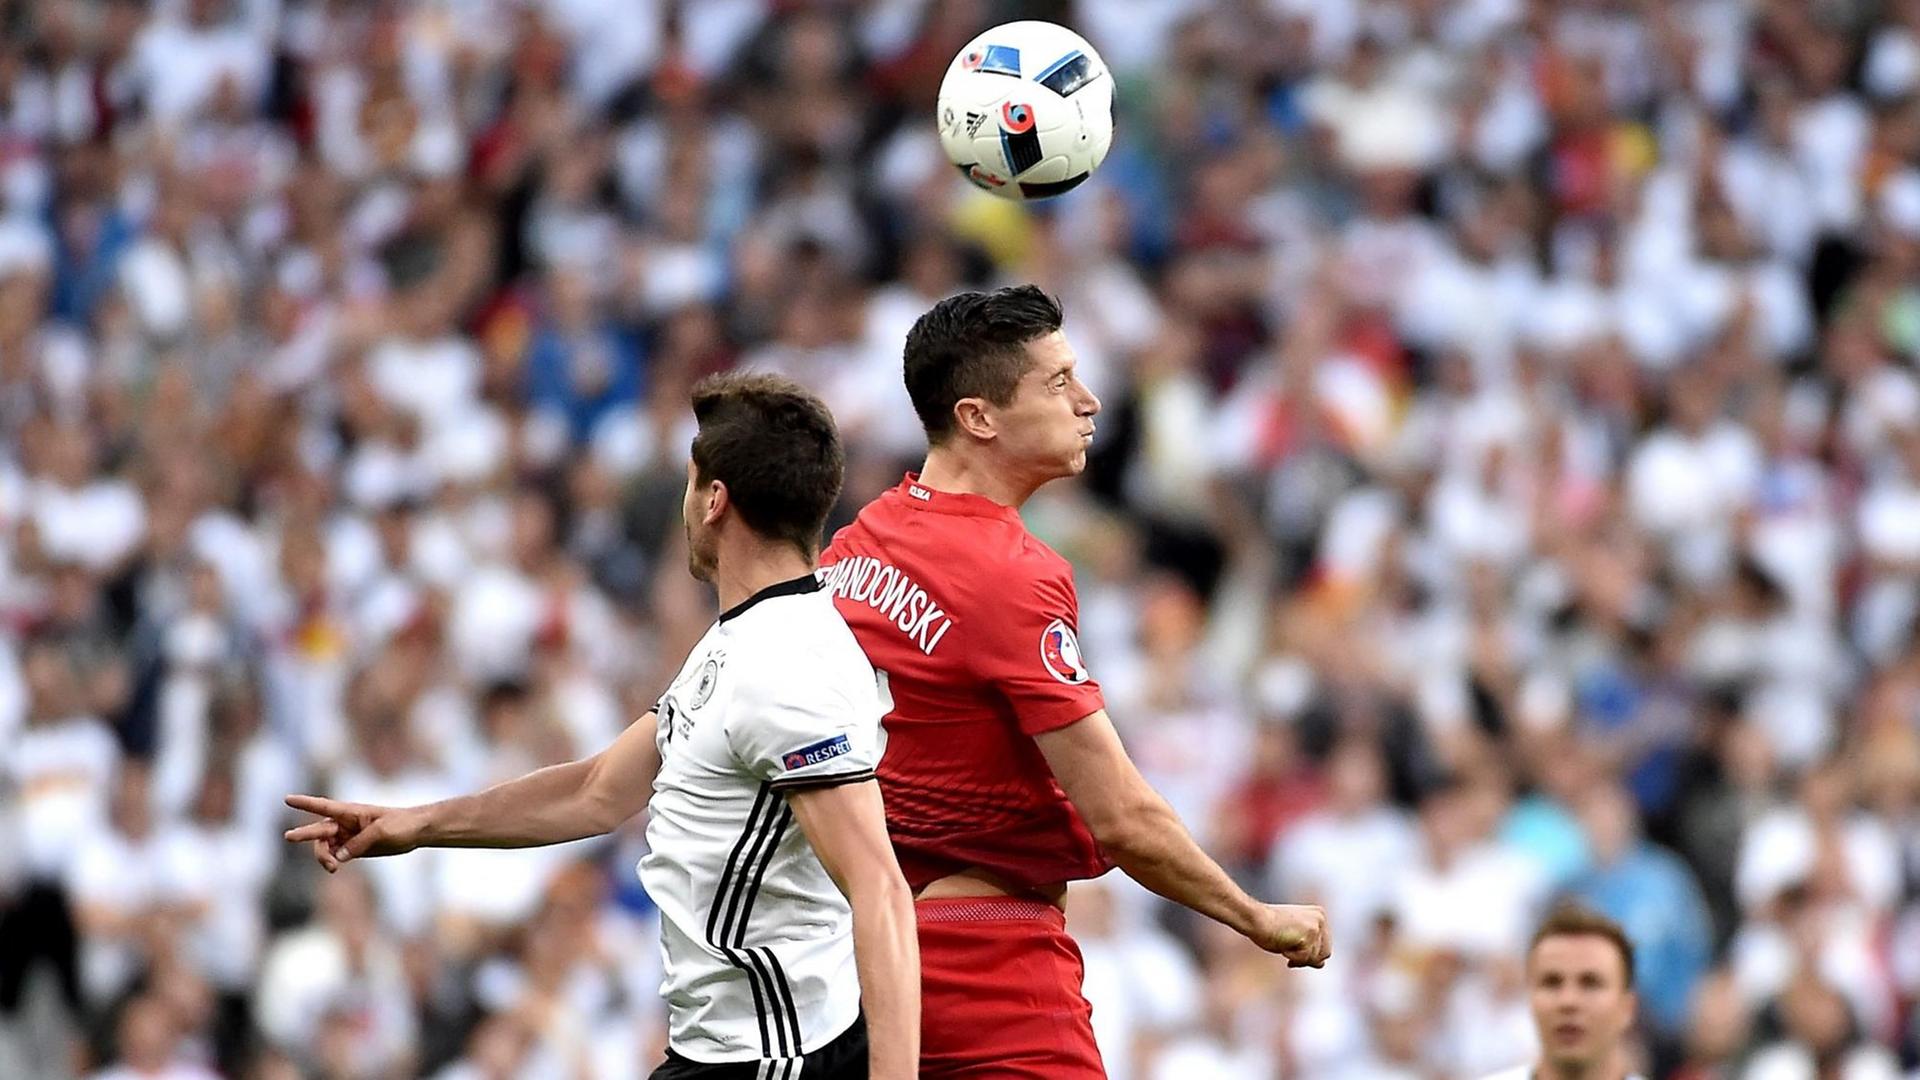 Der polnische National-Spieler Robert Lewandowski und der deutsche National-Spieler Jonas Hector springen nach dem Ball.